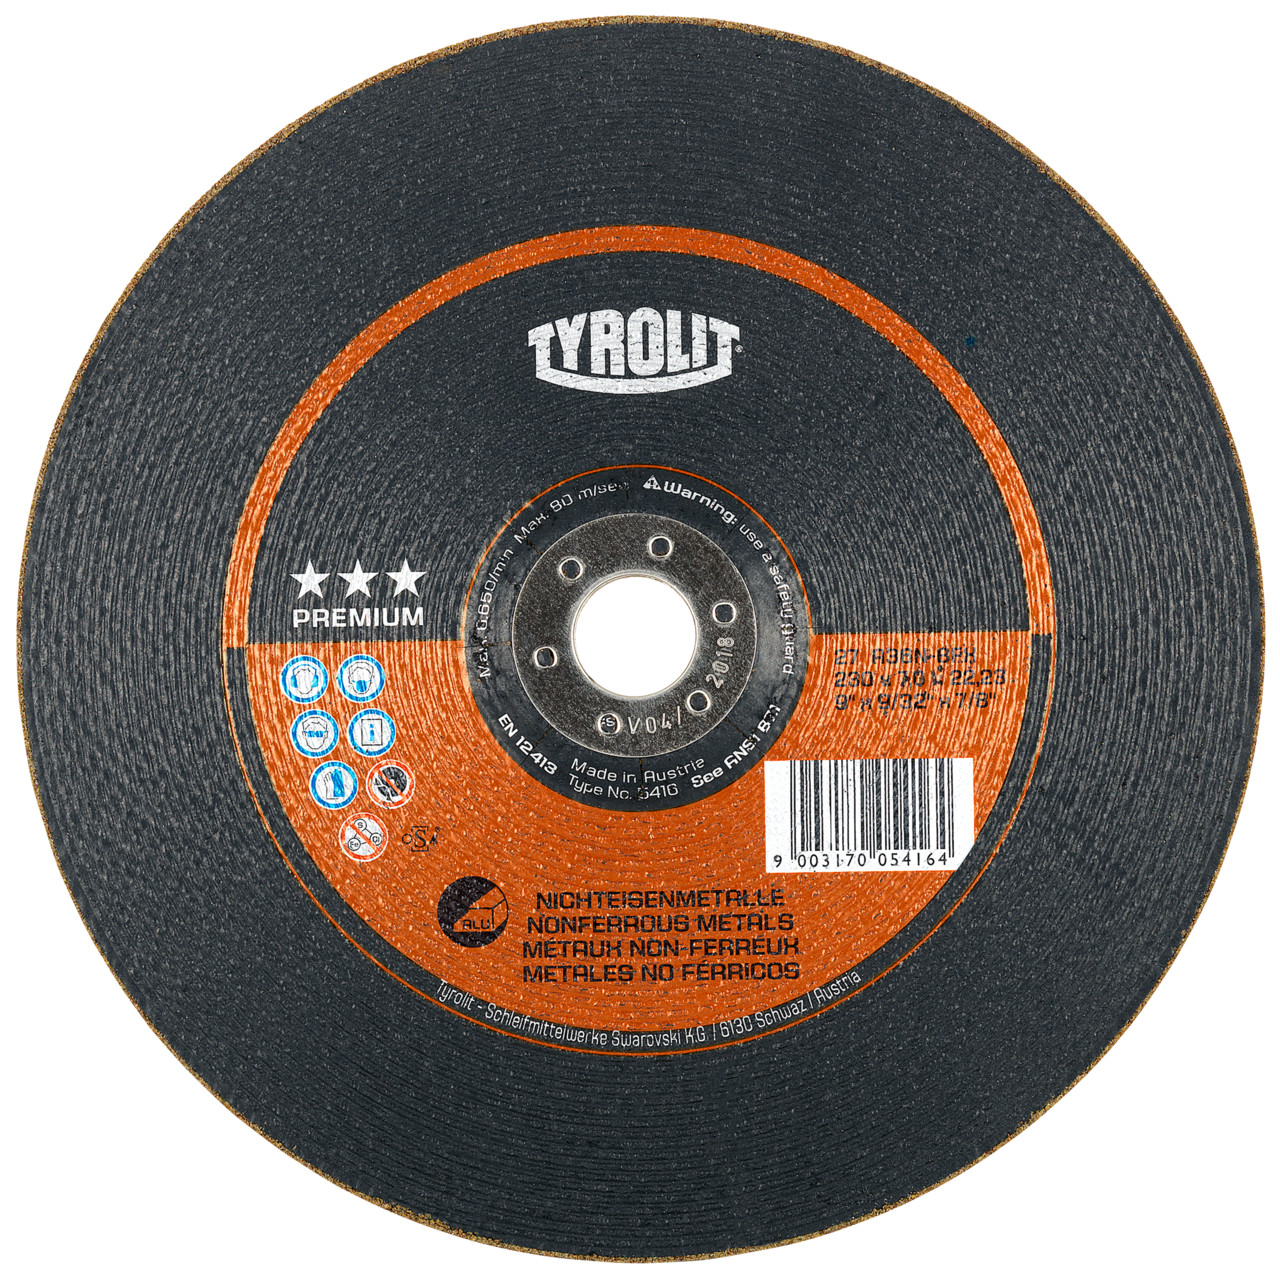 Tyrolit Roughing disc DxUxH 230x4x22.23 For non-ferrous metals, shape: 27 - offset version, Art. 46586